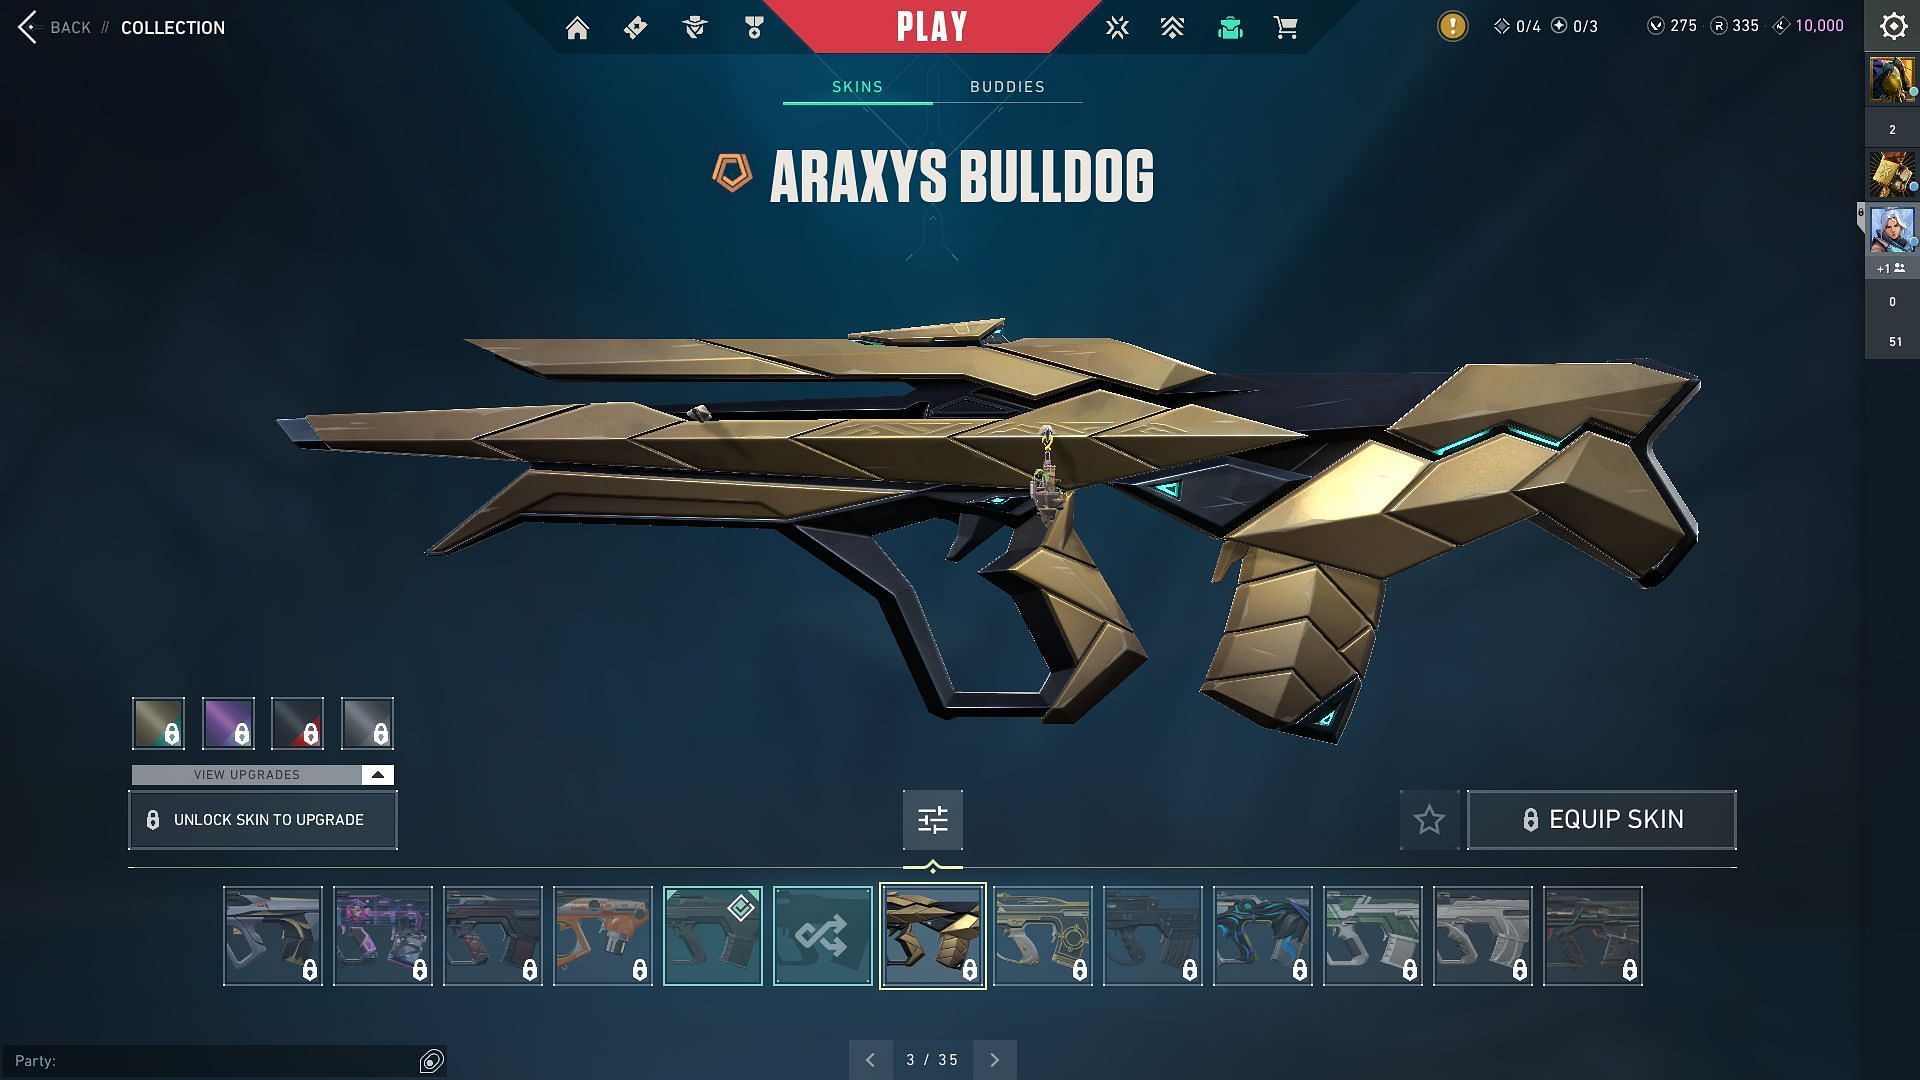 Araxys Bulldog (Image via Sportskeeda and Riot Games)